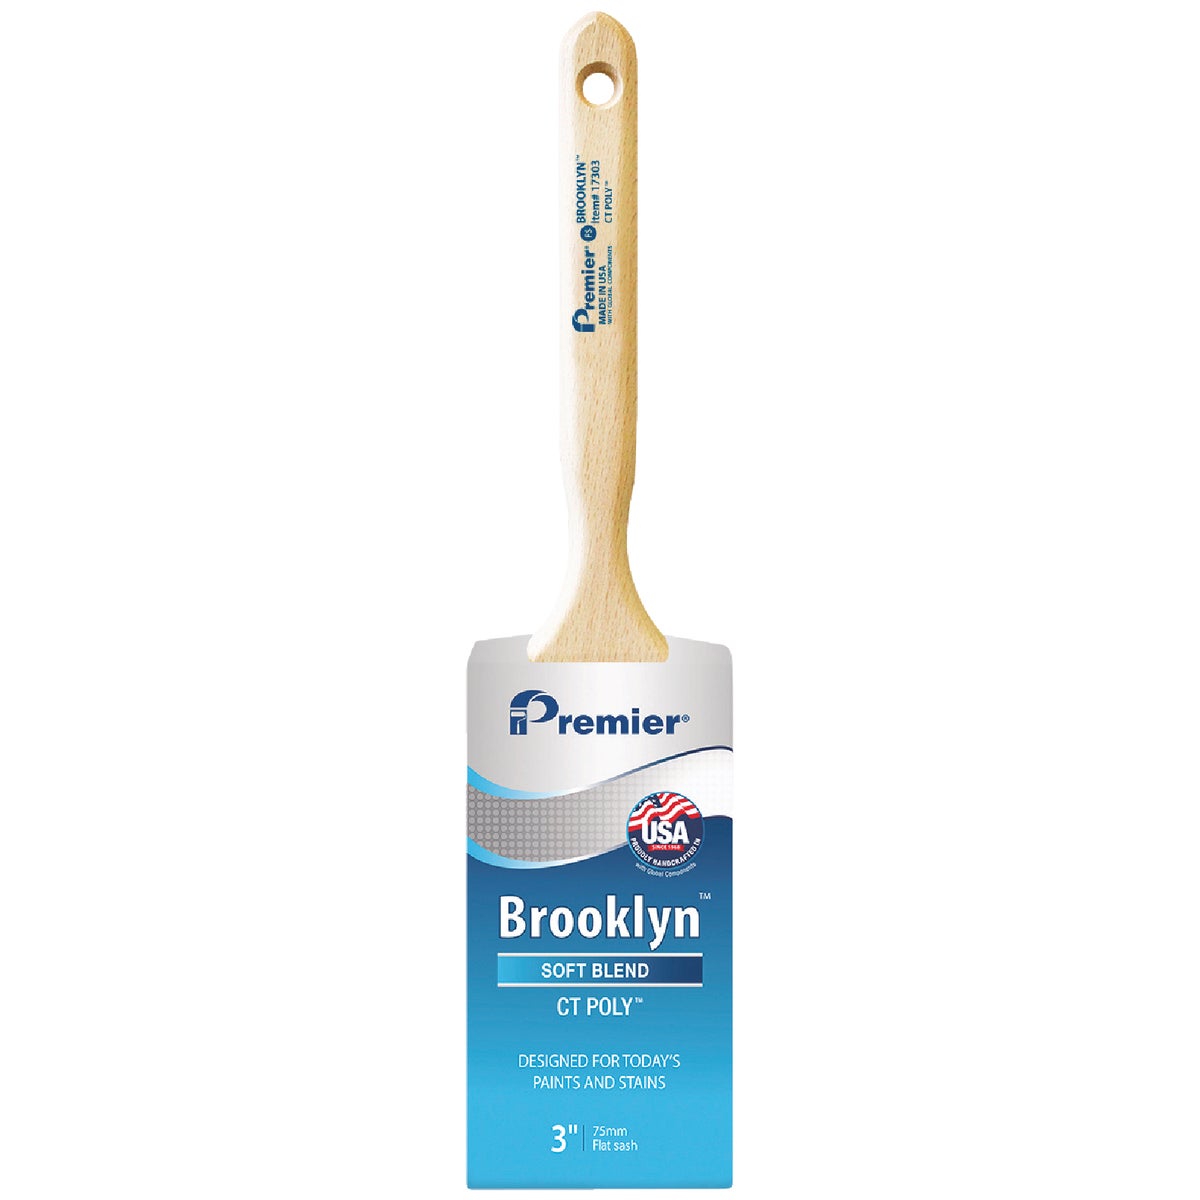 Premier Brooklyn 3 In. Flat Sash CT Poly Brush